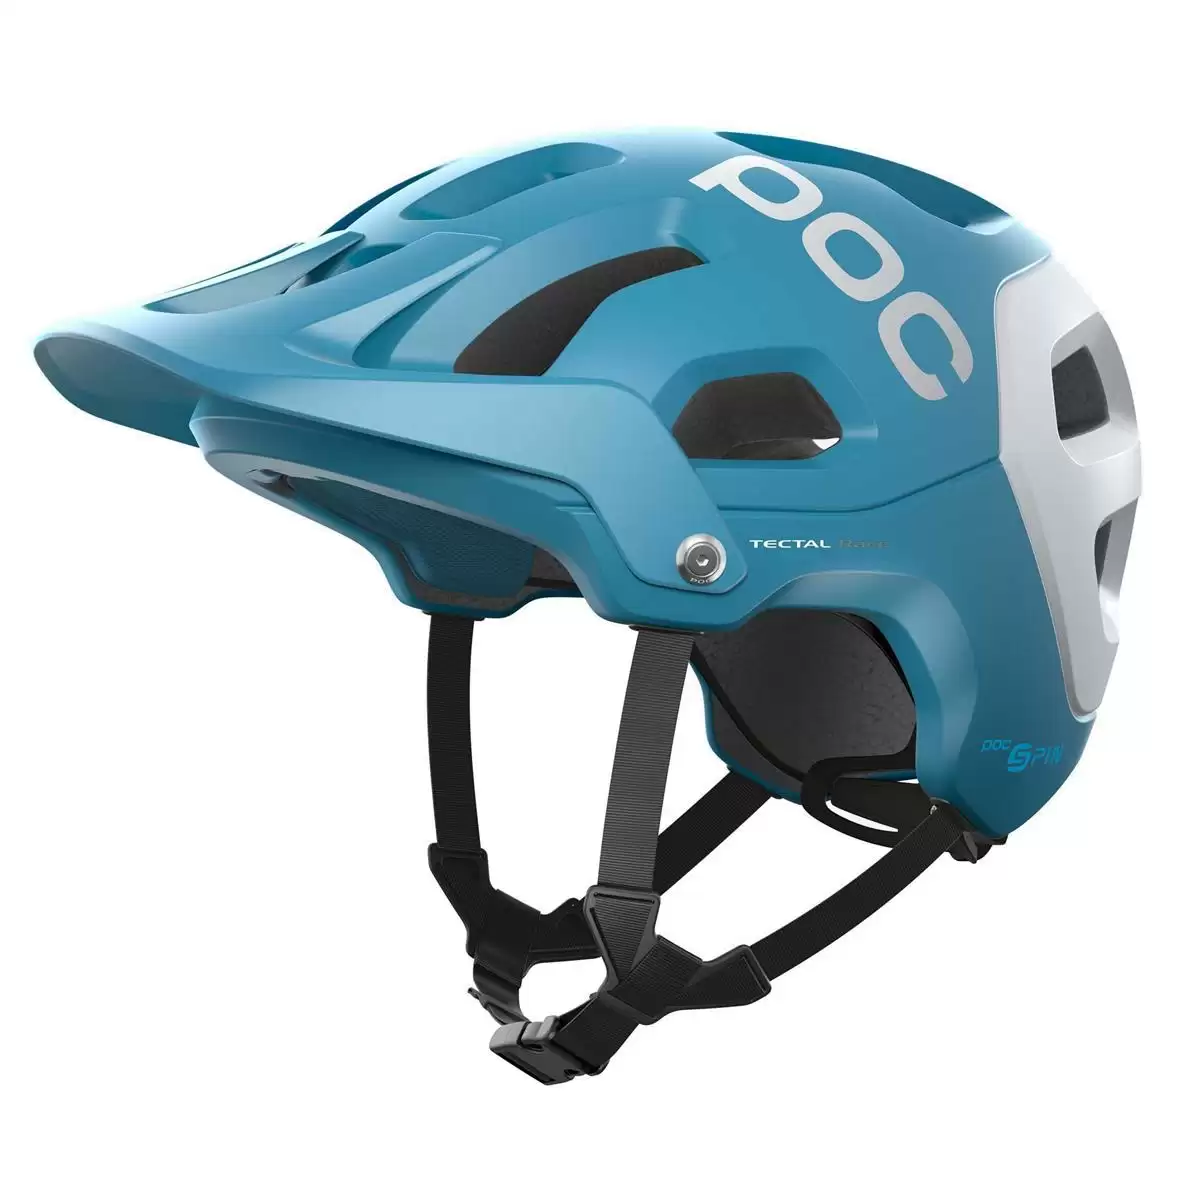 Enduro Helmet Tectal Race Spin Light Blue Size XL-XXL (59-62cm) - image